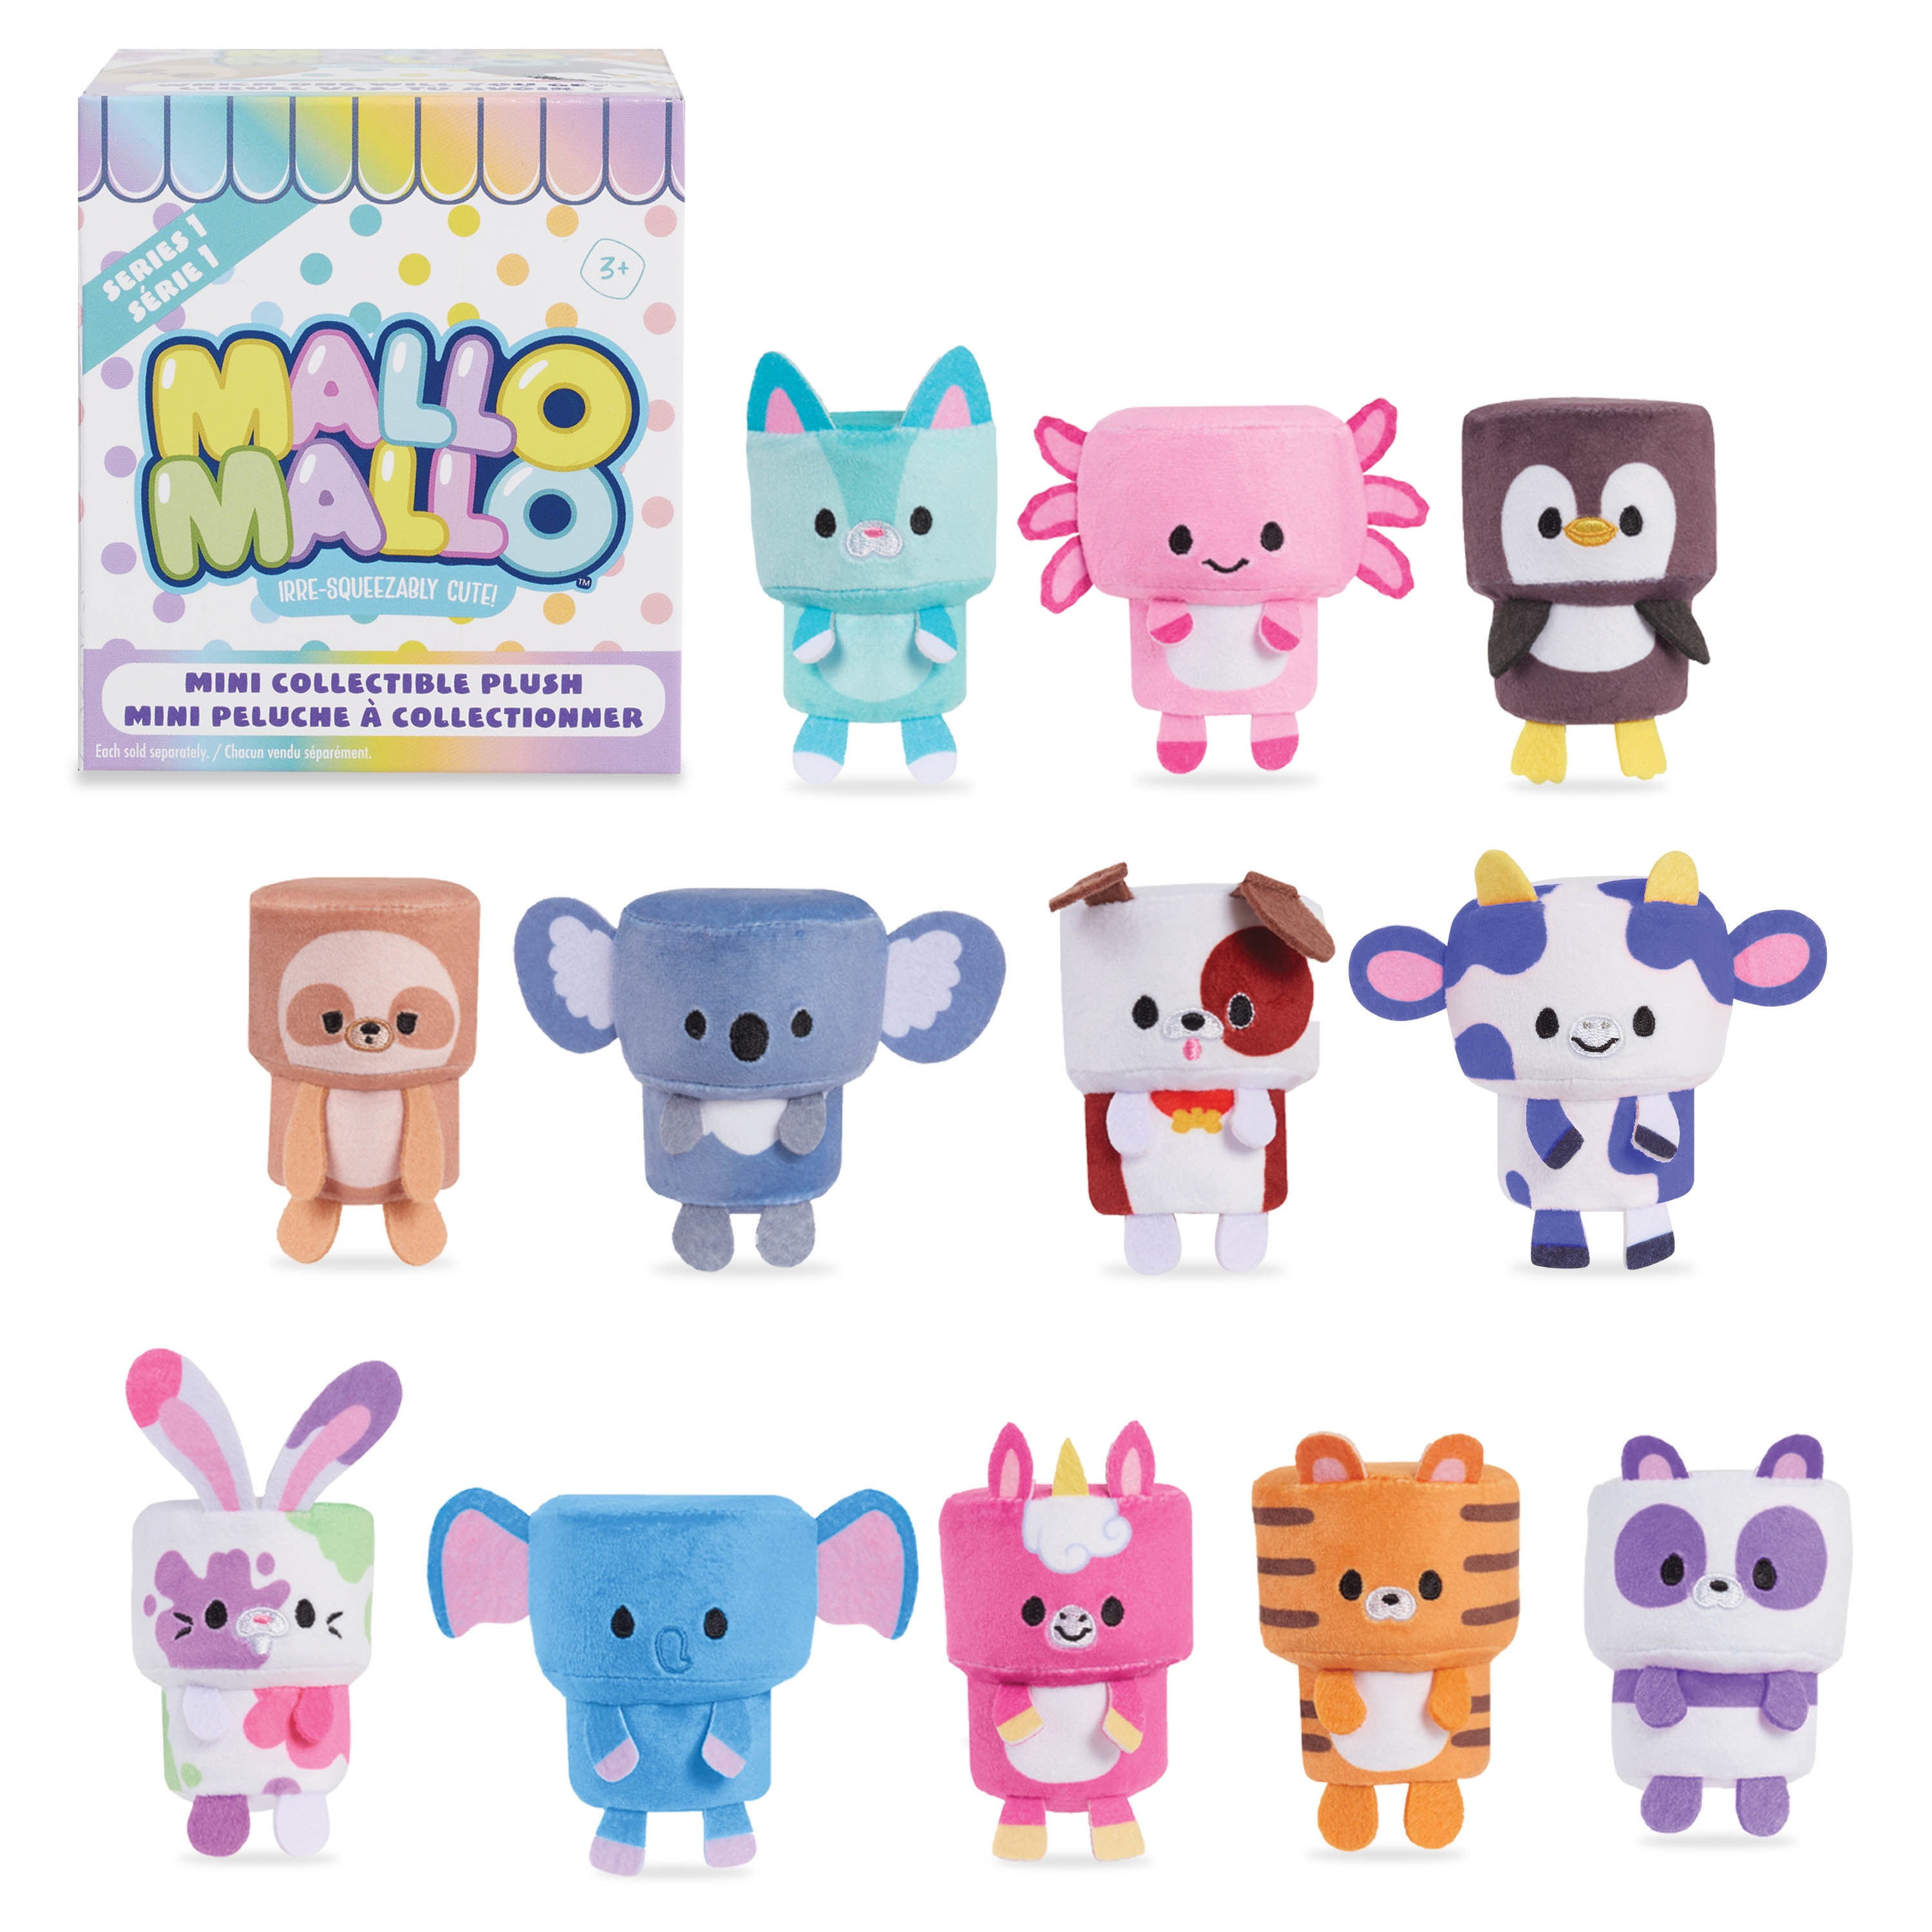 Mallo Mallo Mini Collectible Plush, Kids Toys for Ages 3 up 